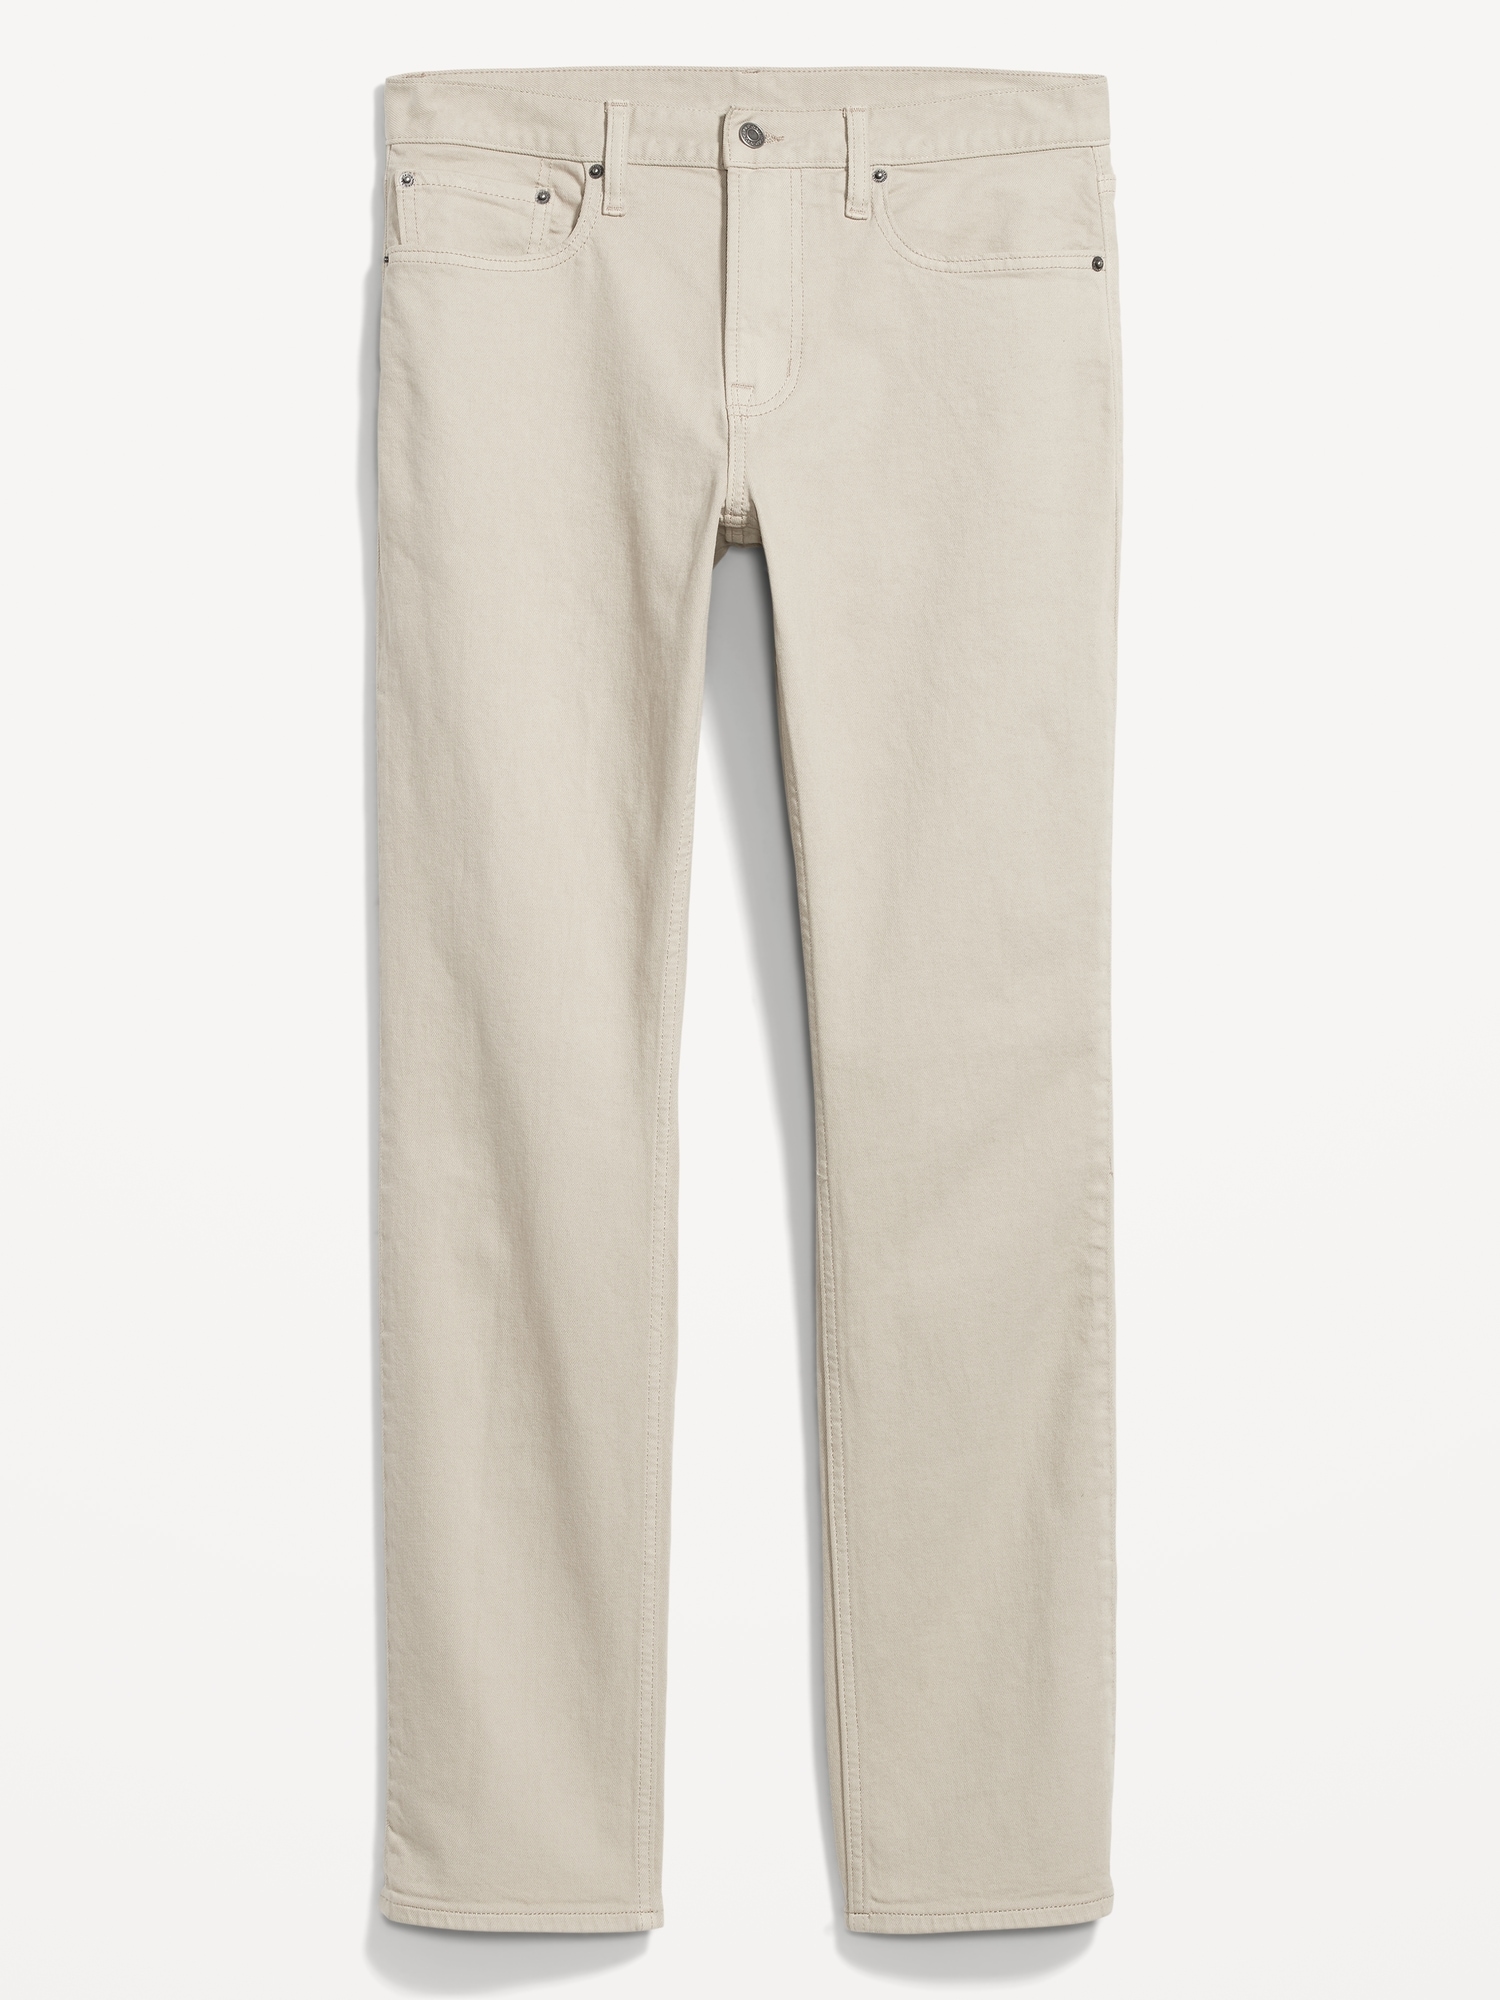 Straight Five-Pocket Pants for Old Men | Navy